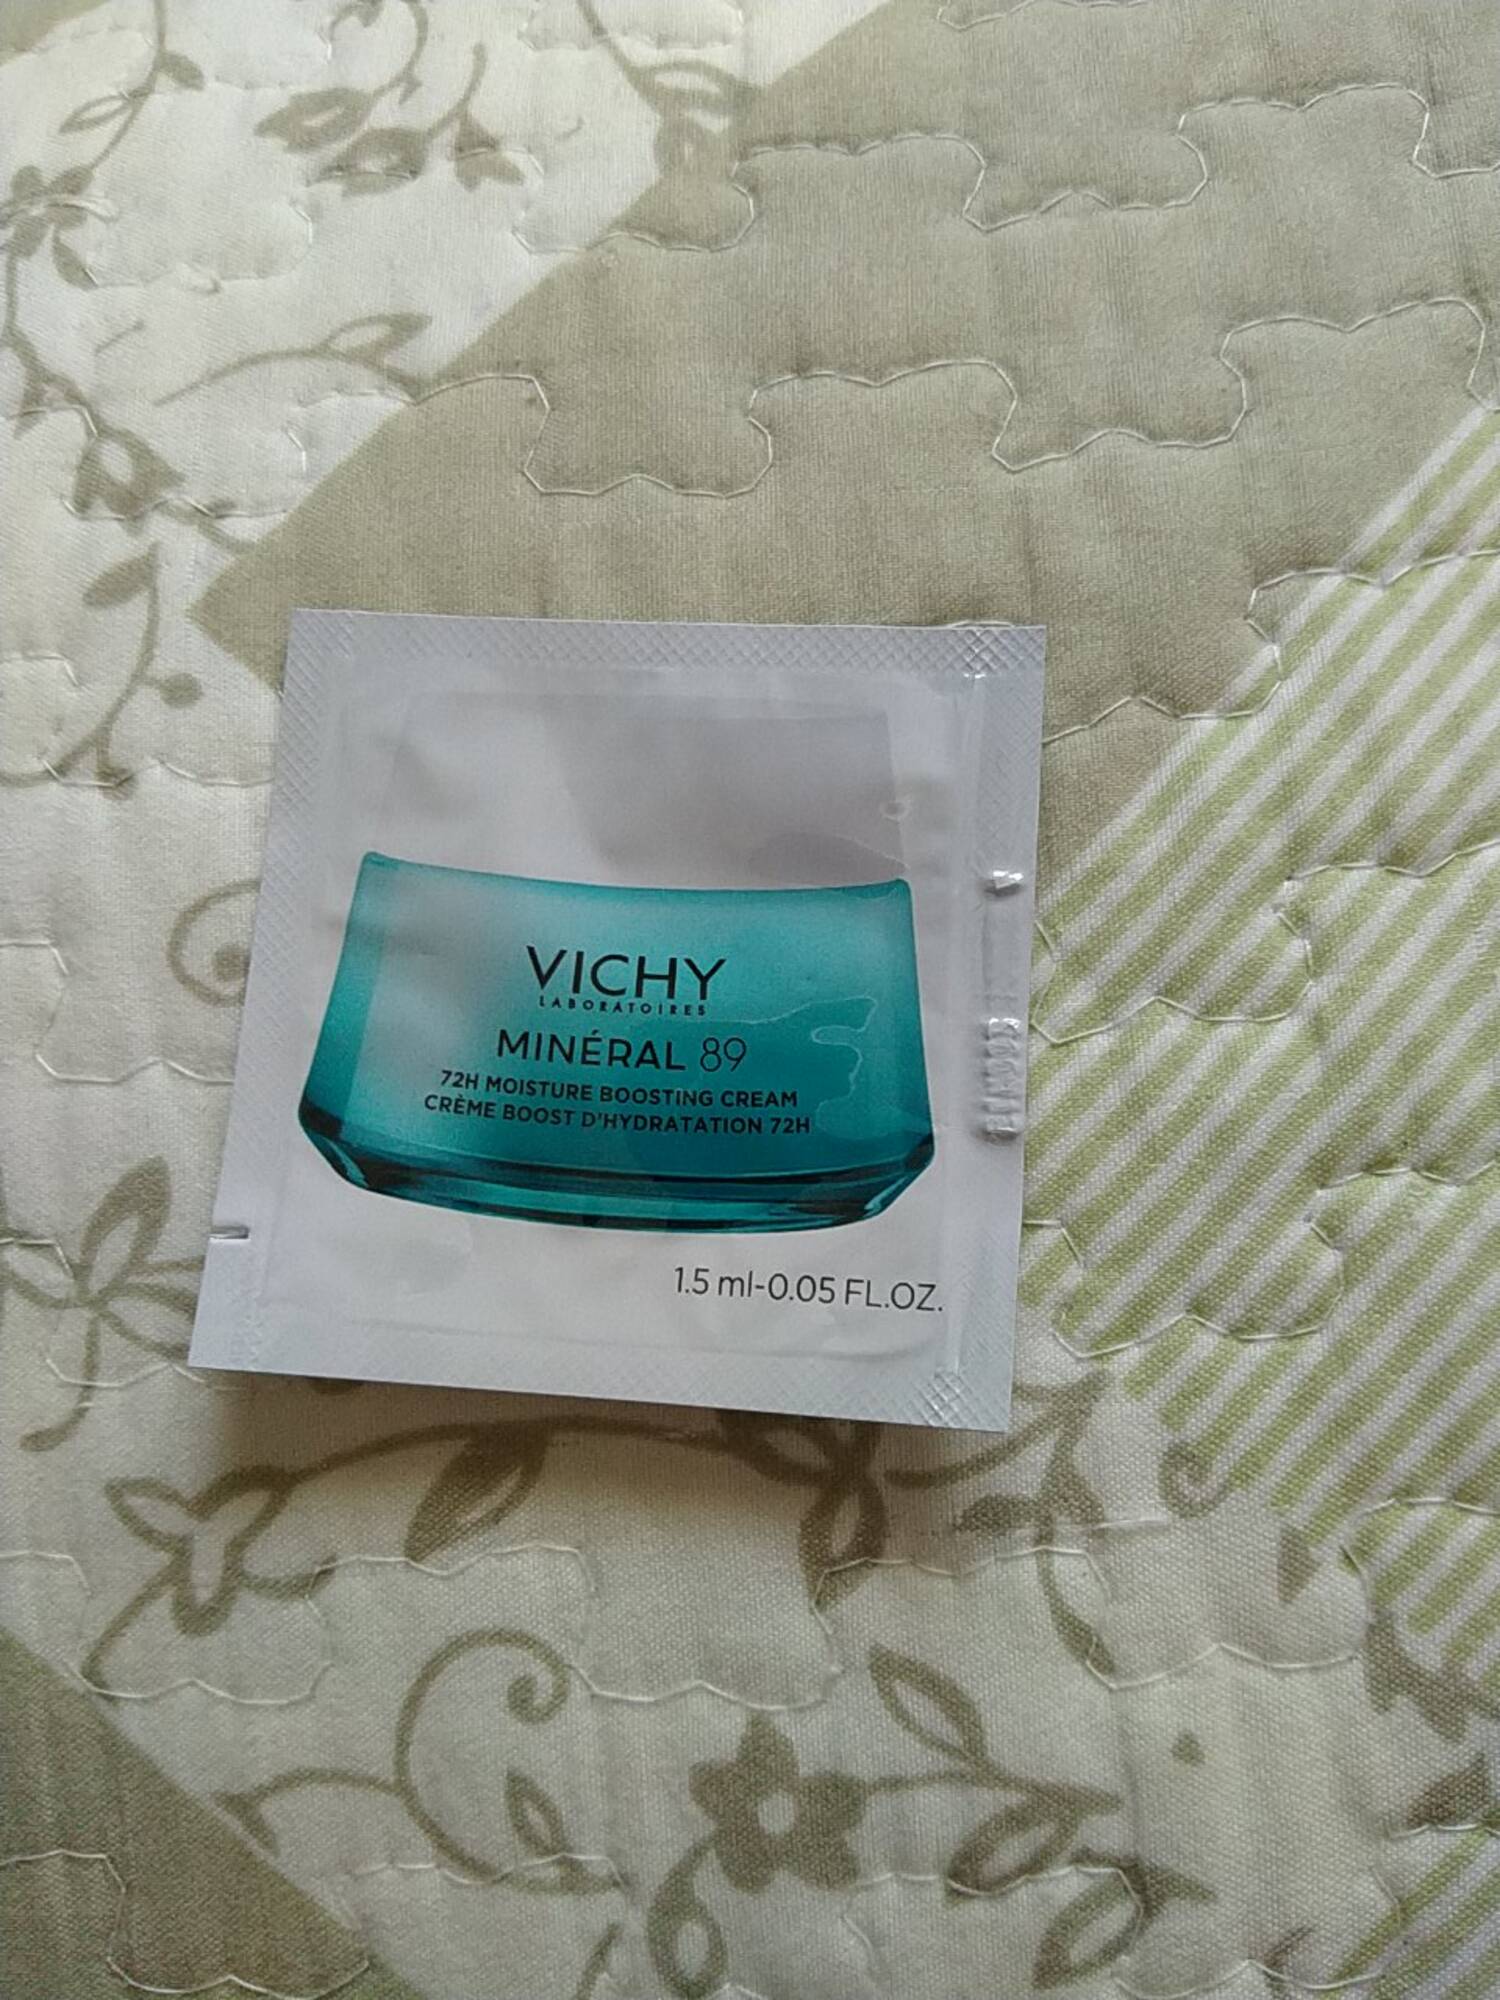 VICHY - Minéral 89 - Crème boost d'hydratation 72h